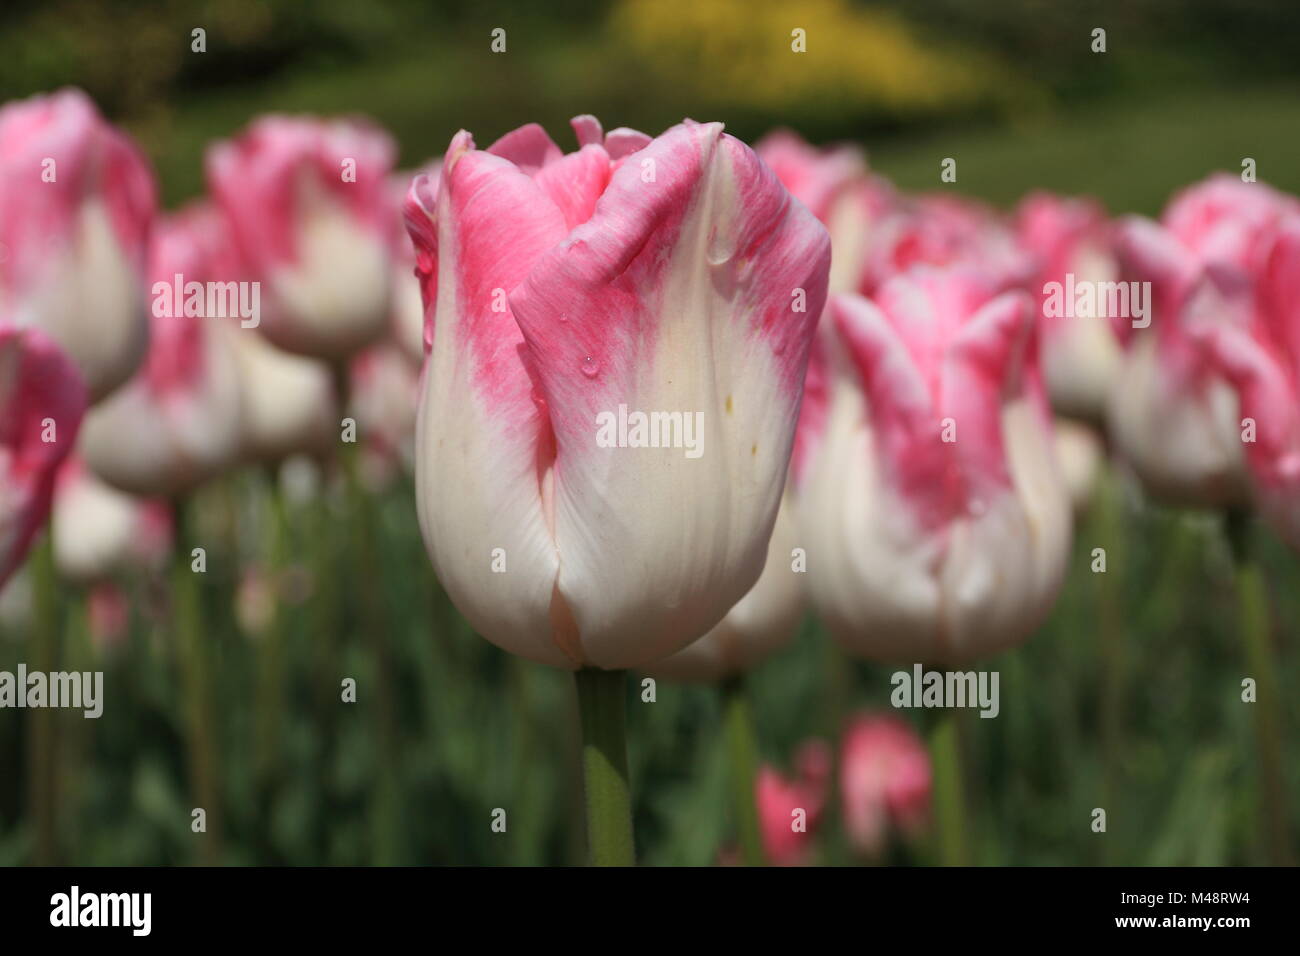 White pink tulips Stock Photo